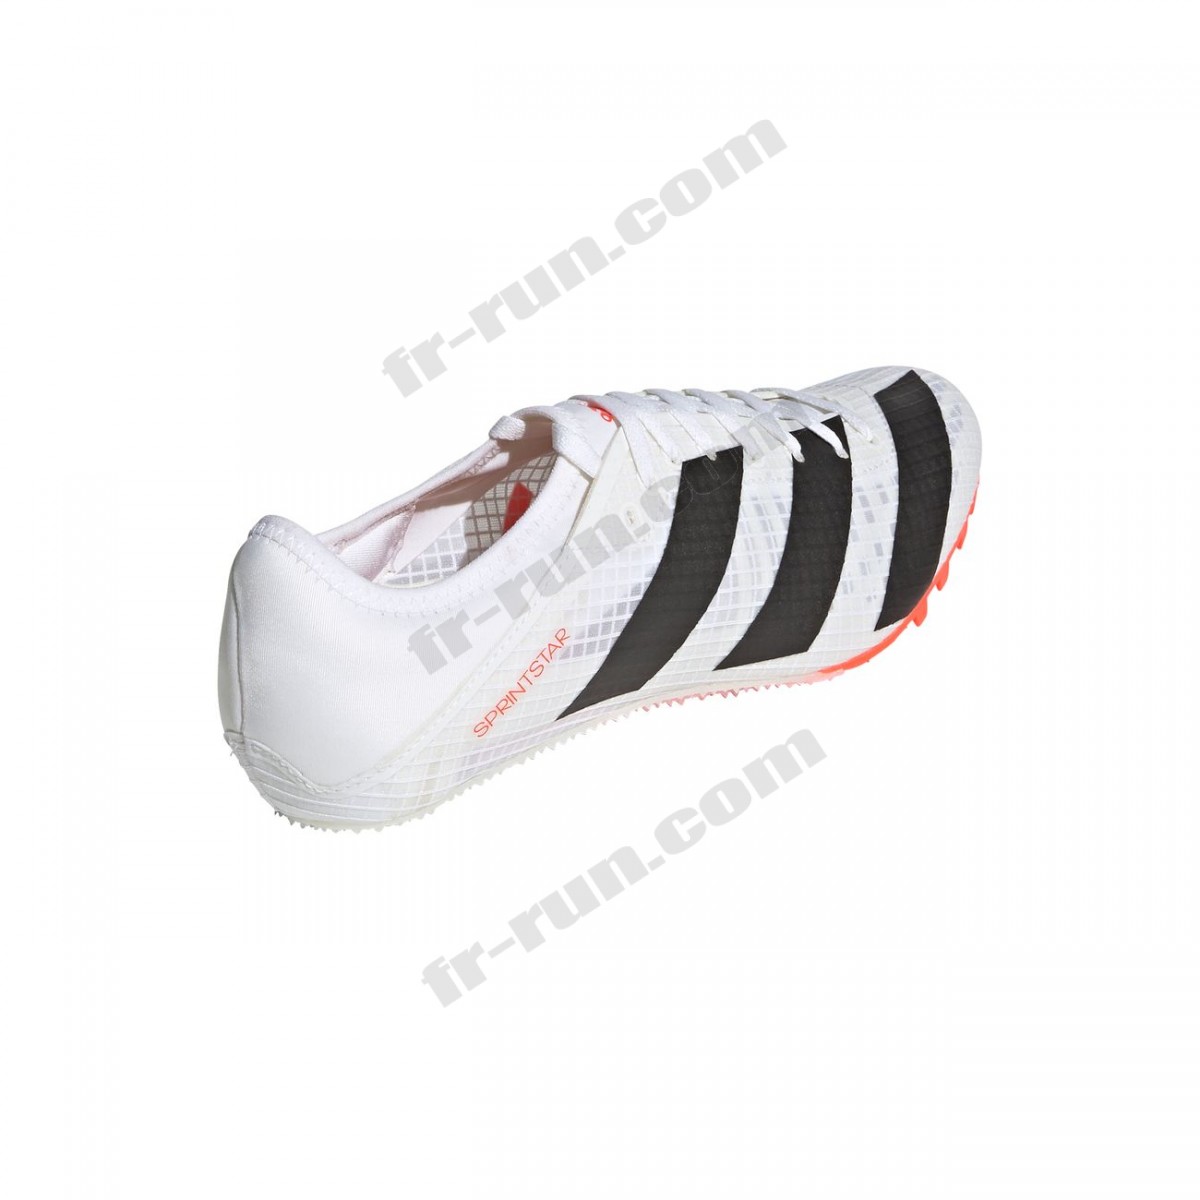 Adidas/Athlétisme homme ADIDAS Chaussures adidas Sprintstar Tokyo √ Nouveau style √ Soldes - -6